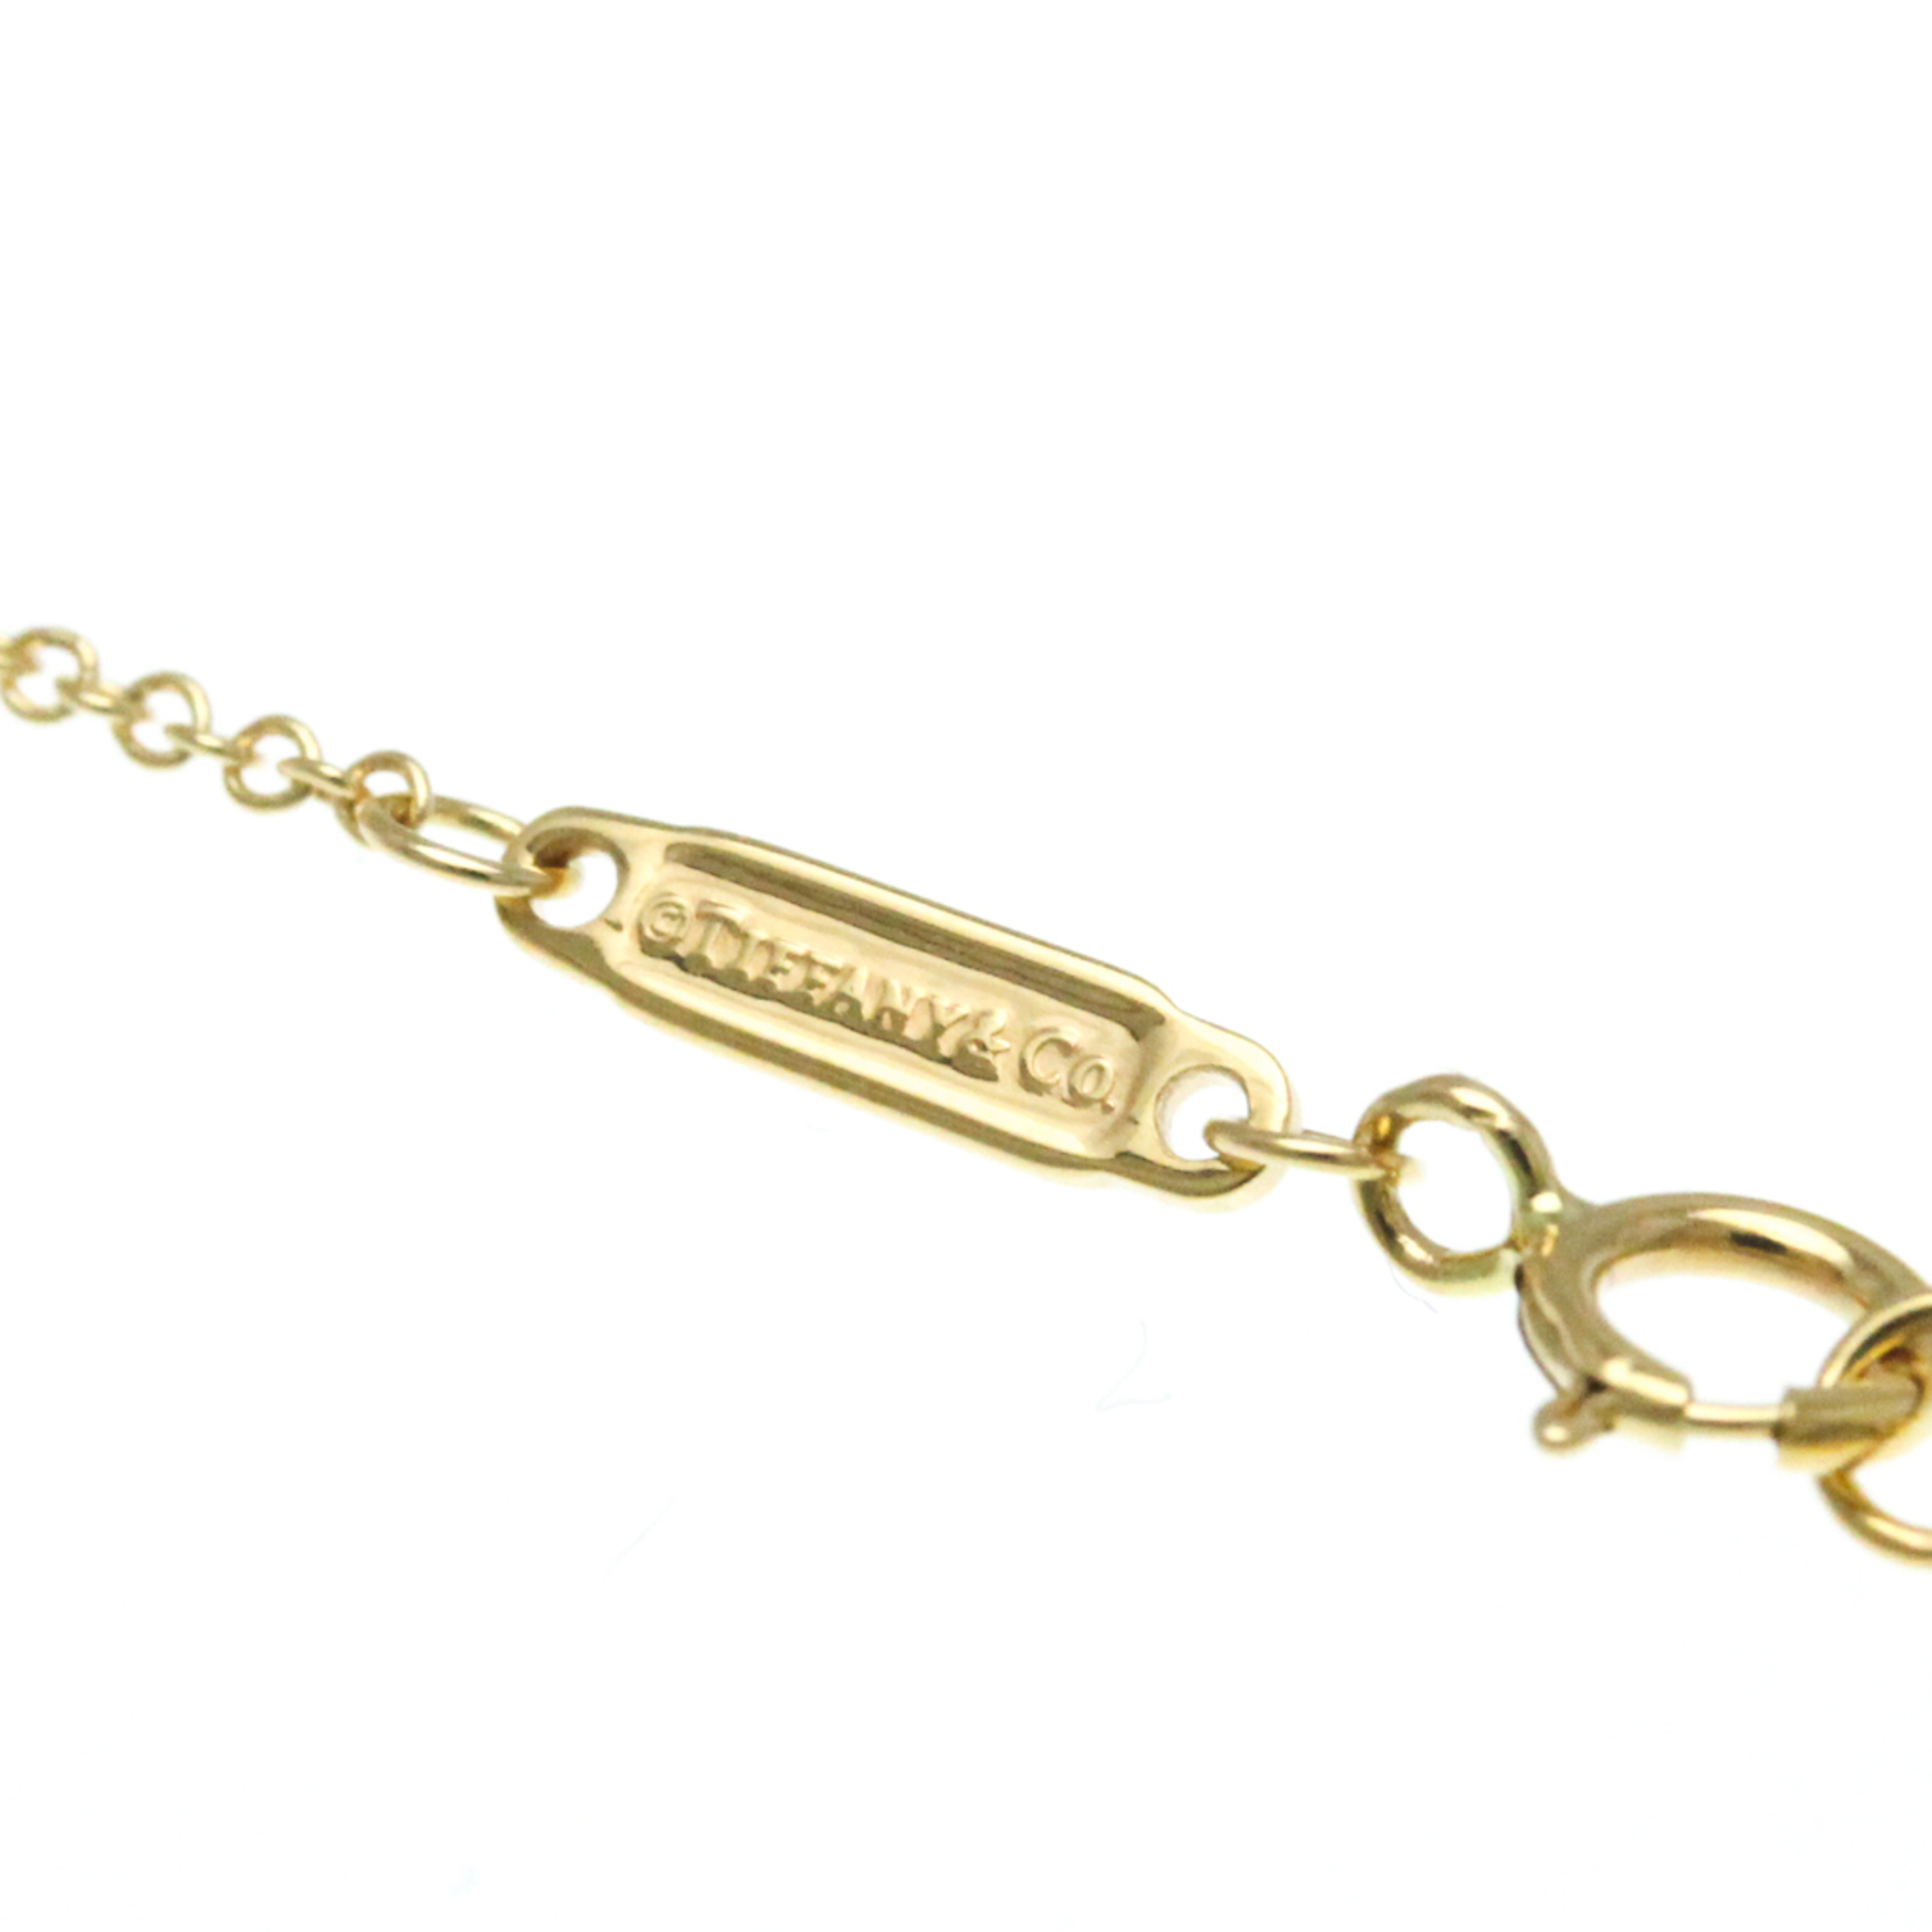 Tiffany T Smile Mini Diamond Necklace Yellow Gold (18K) Diamond Men,Women Fashion Pendant Necklace (Gold)